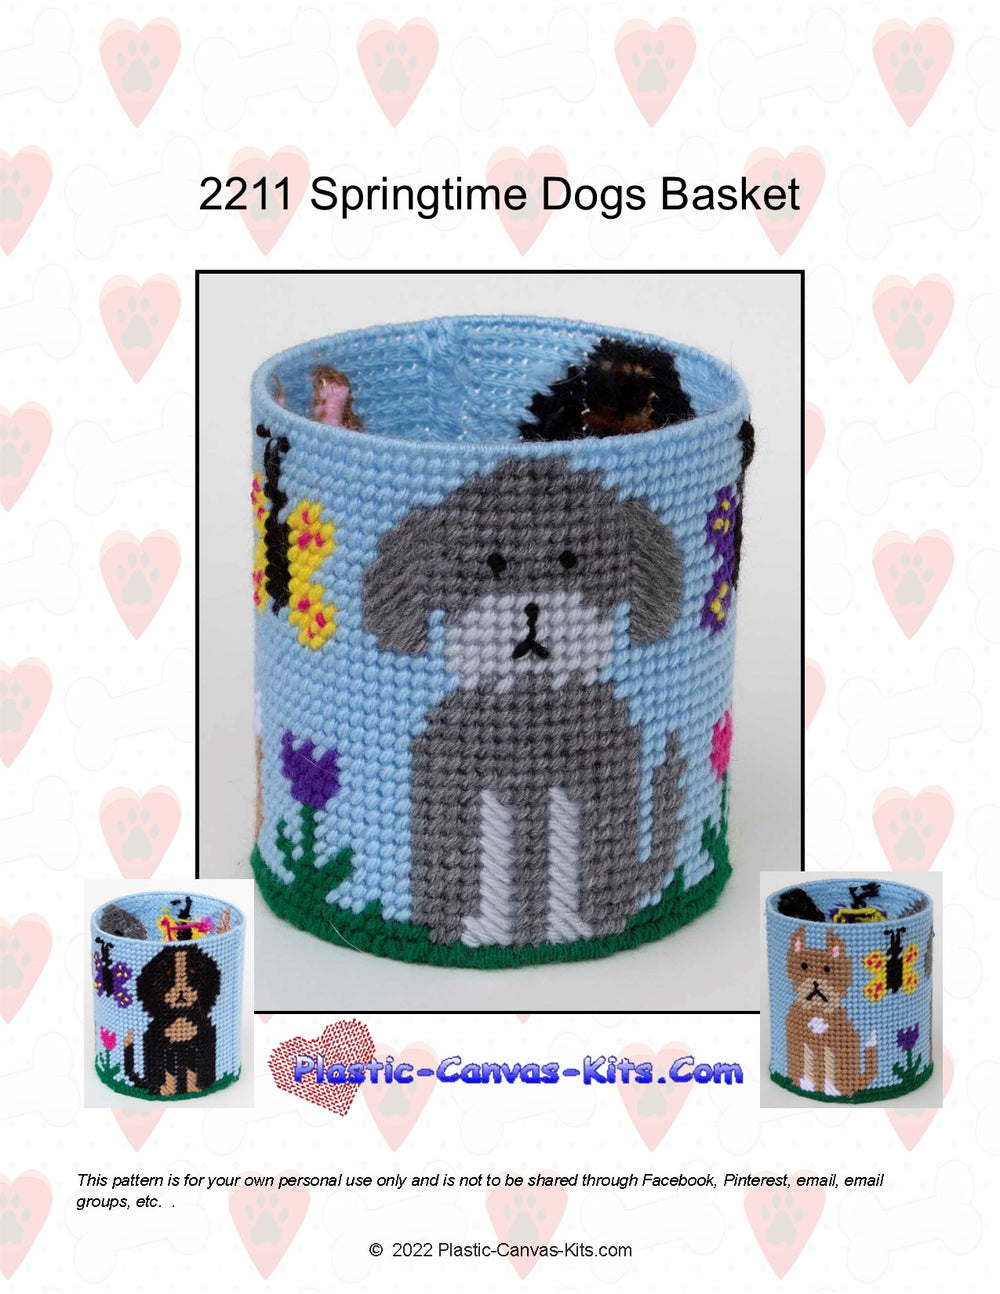 Springtime Dogs Basket